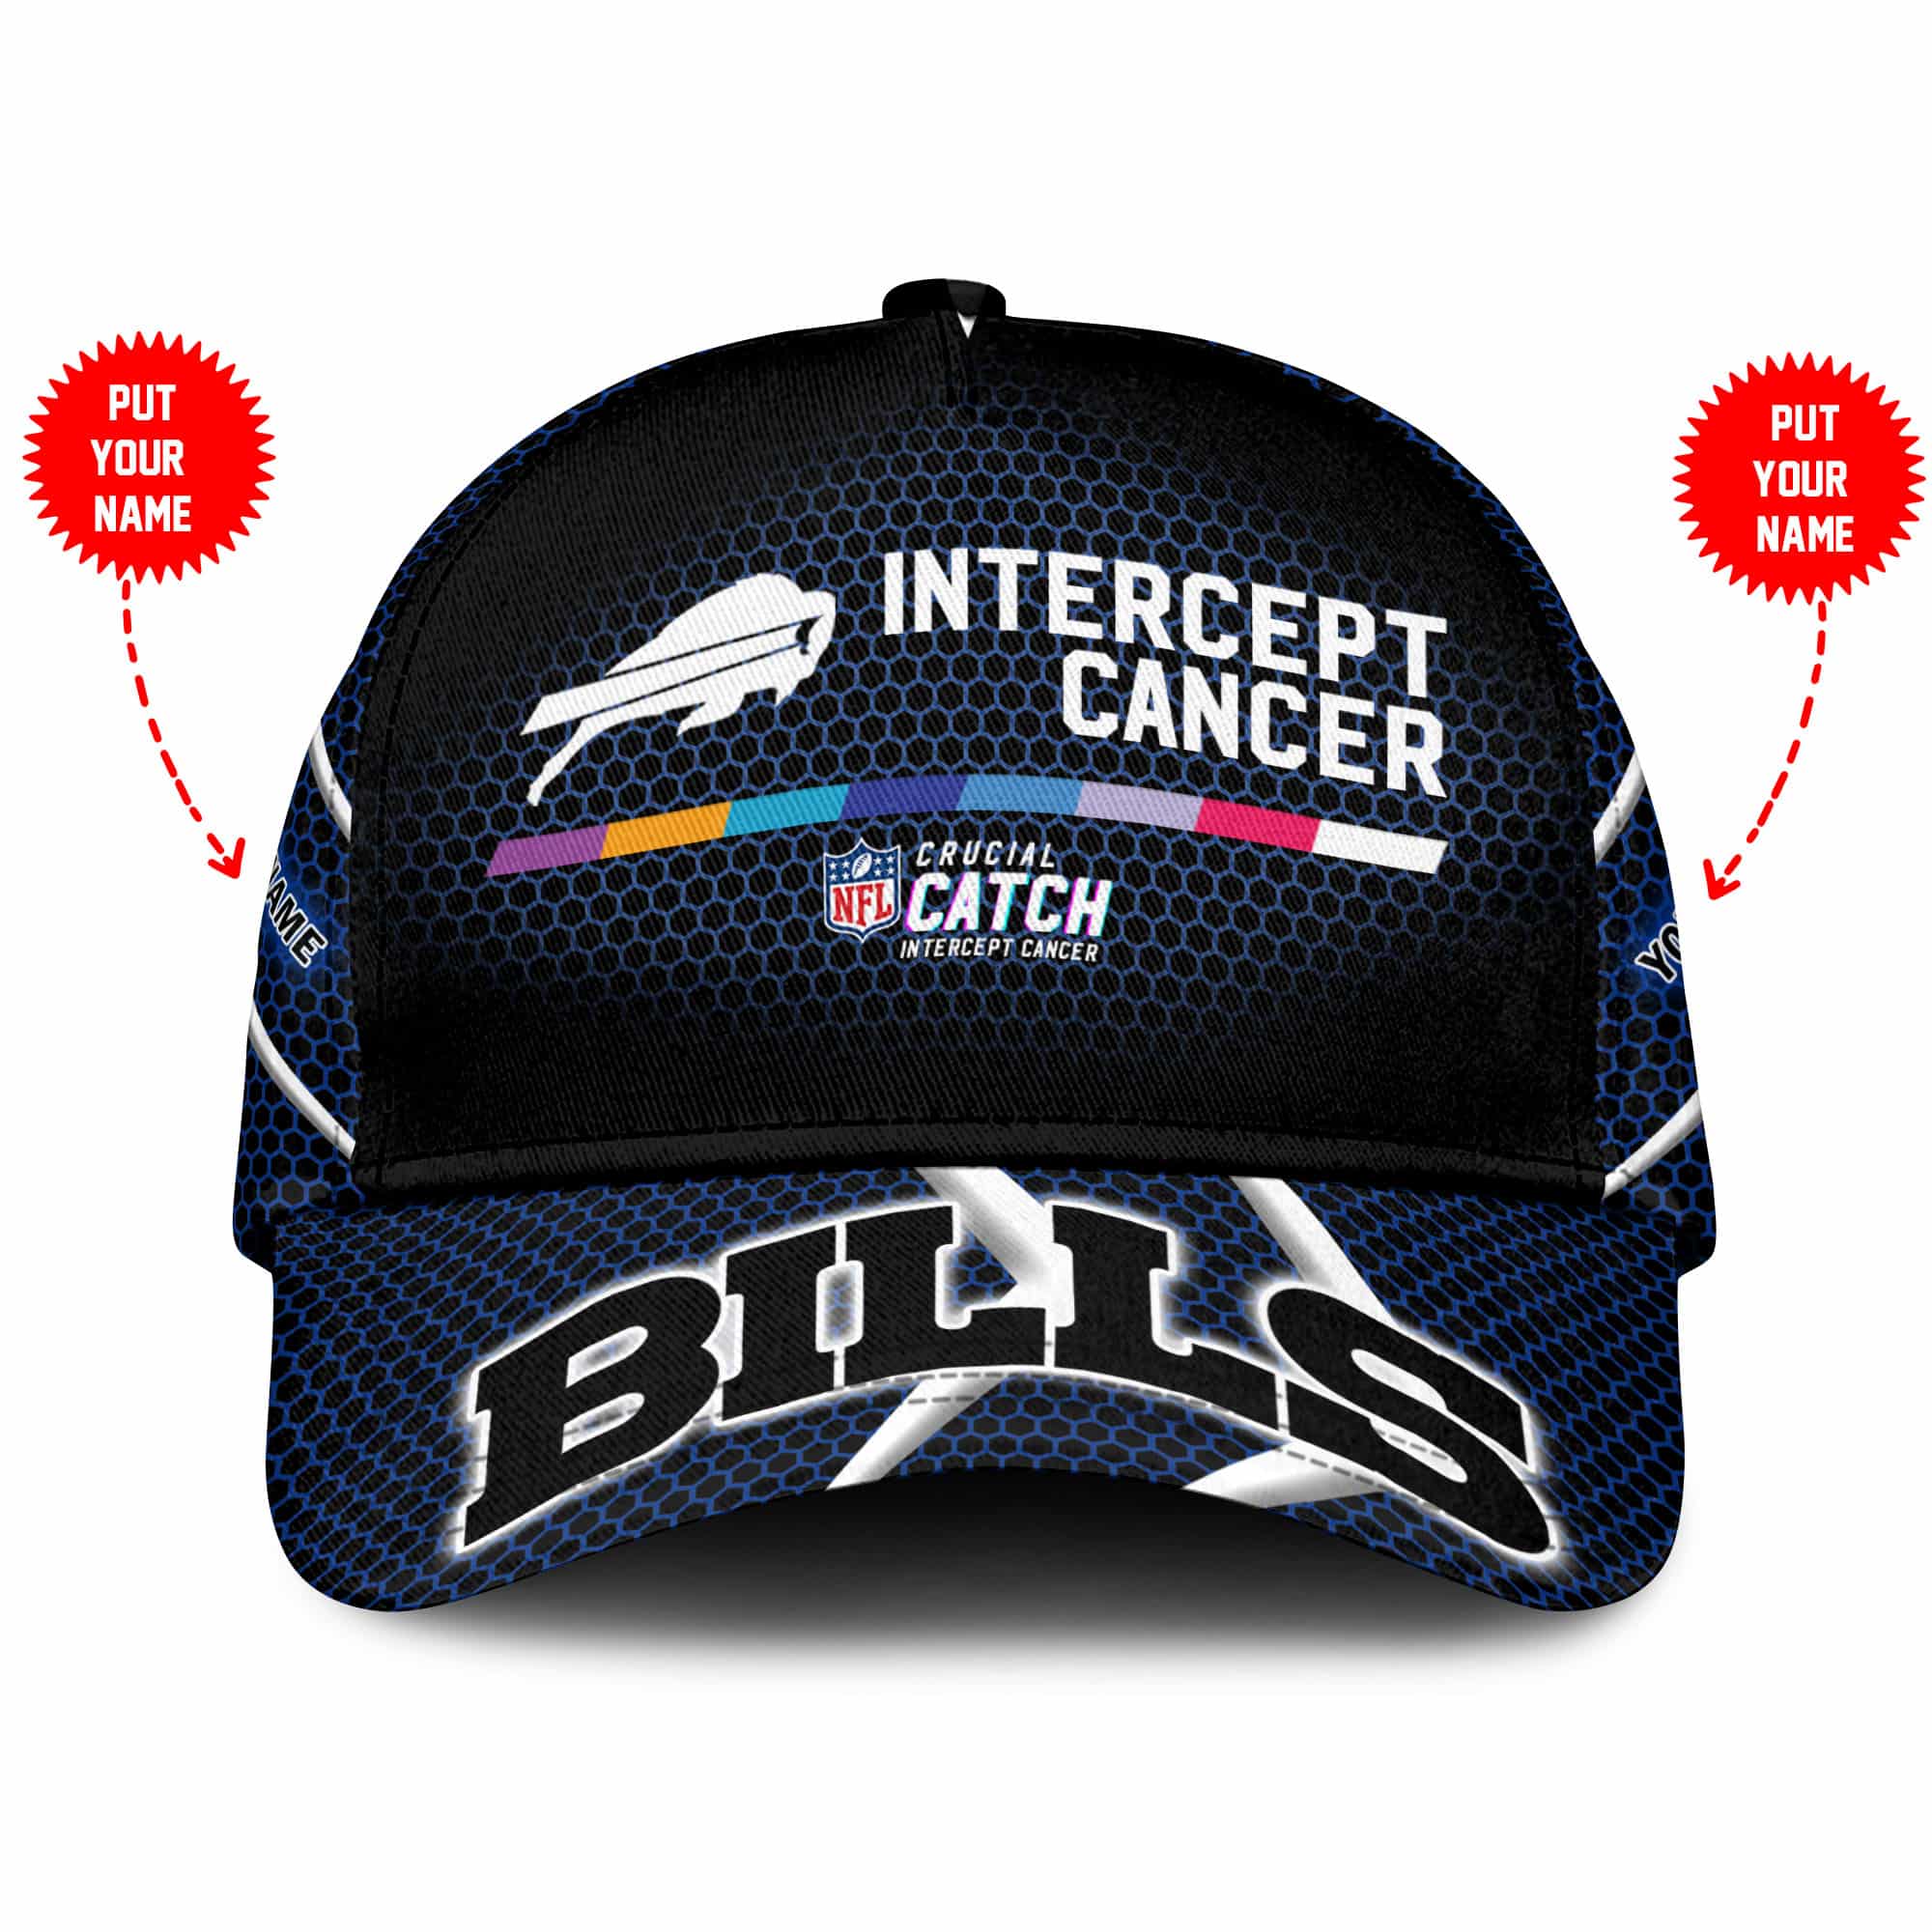 NFL Intercept Cancer Cap Personalized - BTF Store